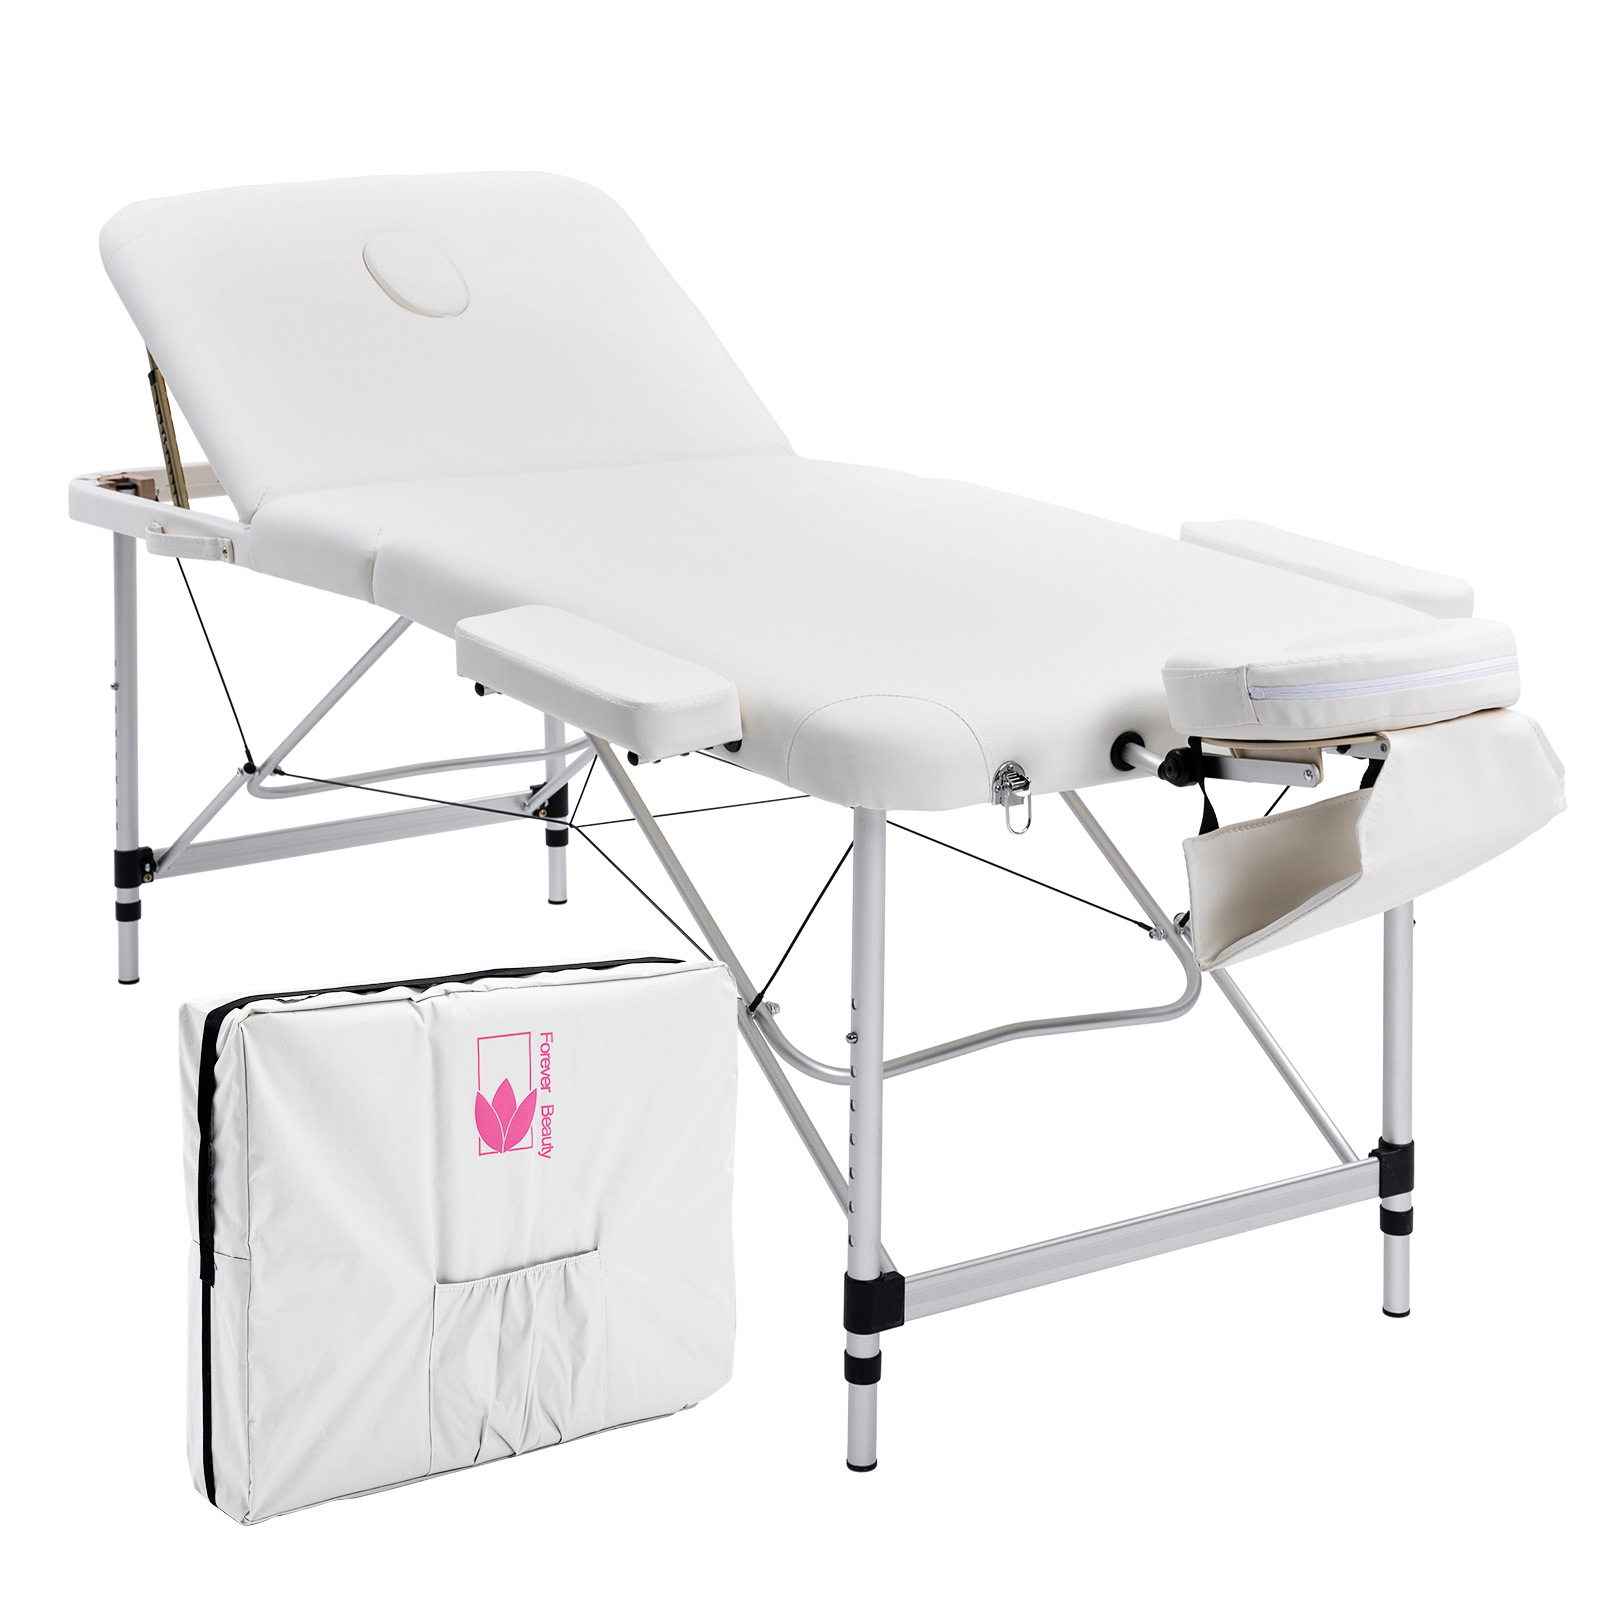 75cm Aluminium Portable Massage Table - WHITE